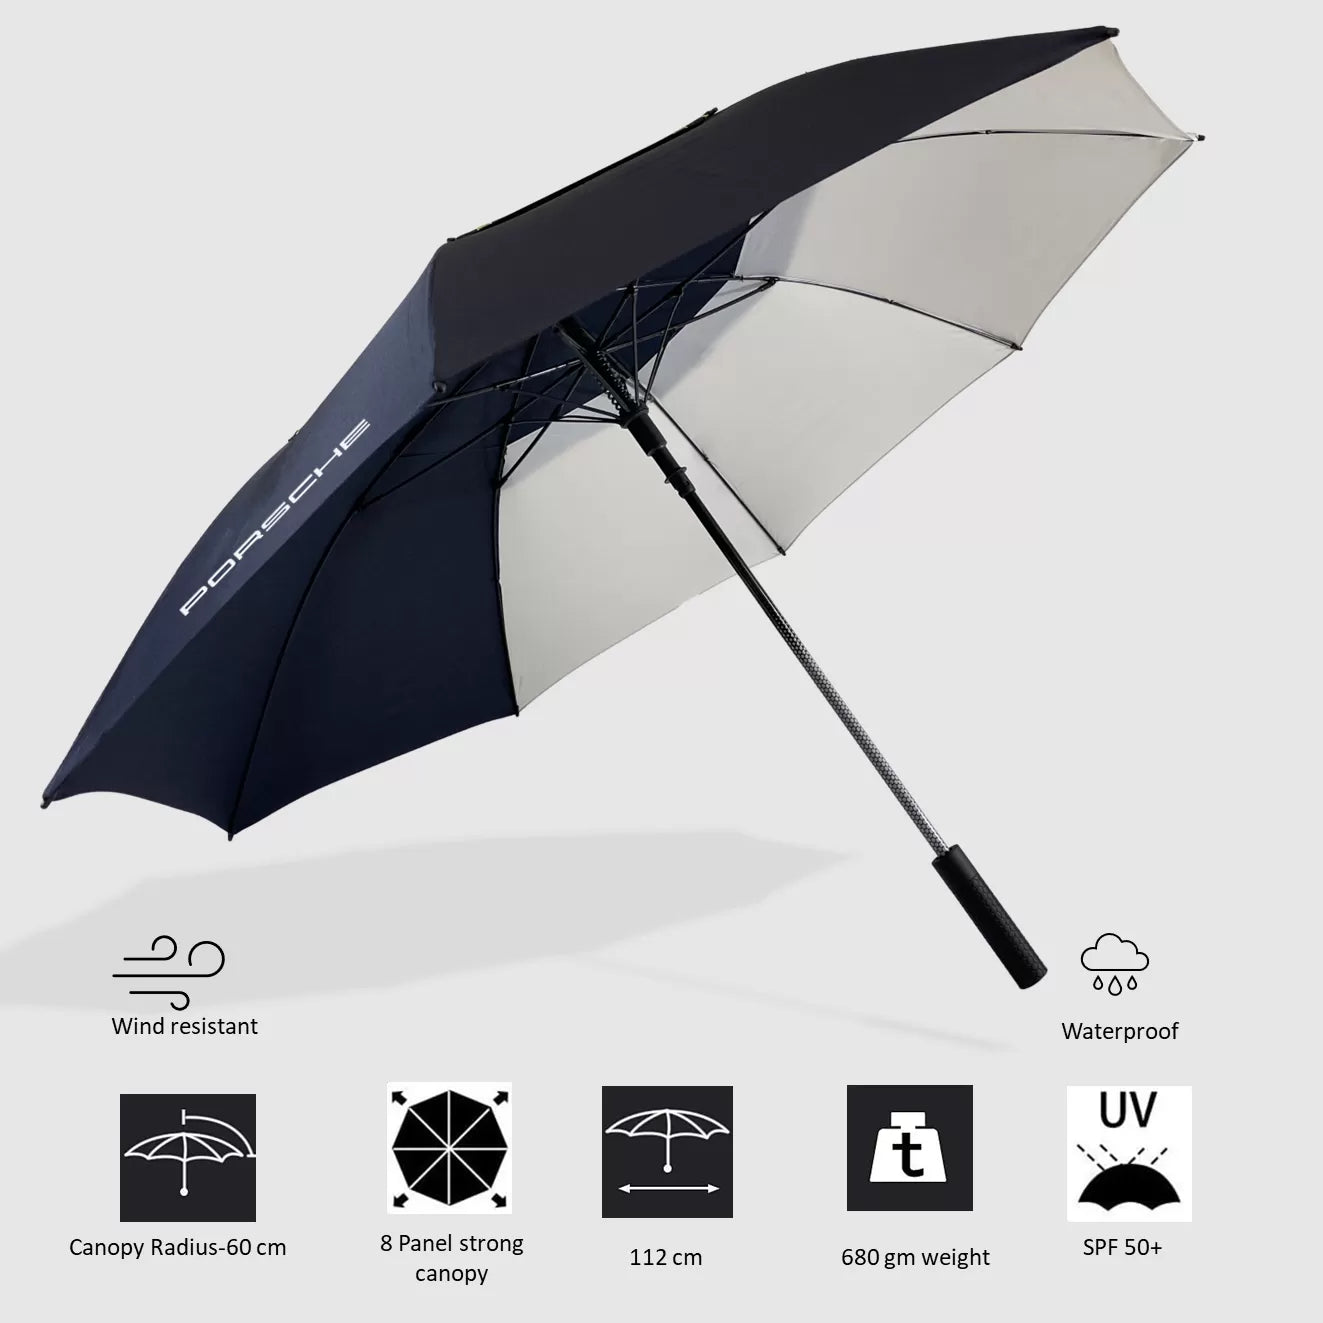 Premium Quality Porsche Car Accessories Umbrella Ultra Strong Anti-UV Automatic Brolly